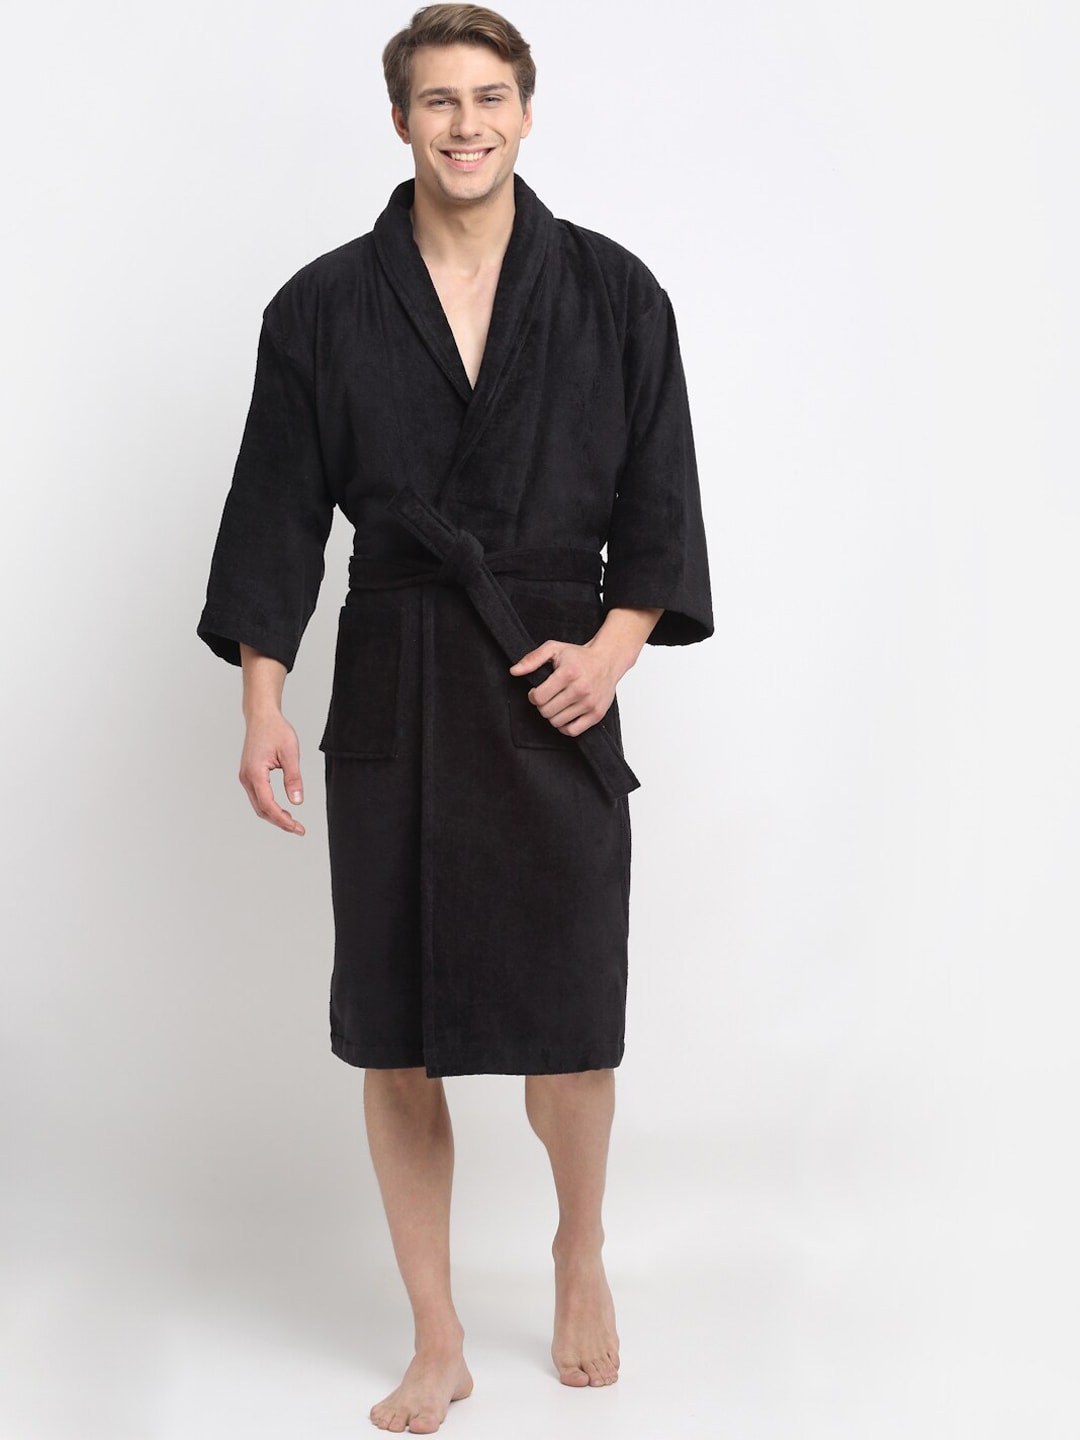 Creeva Black Solid Bath Robe Price in India